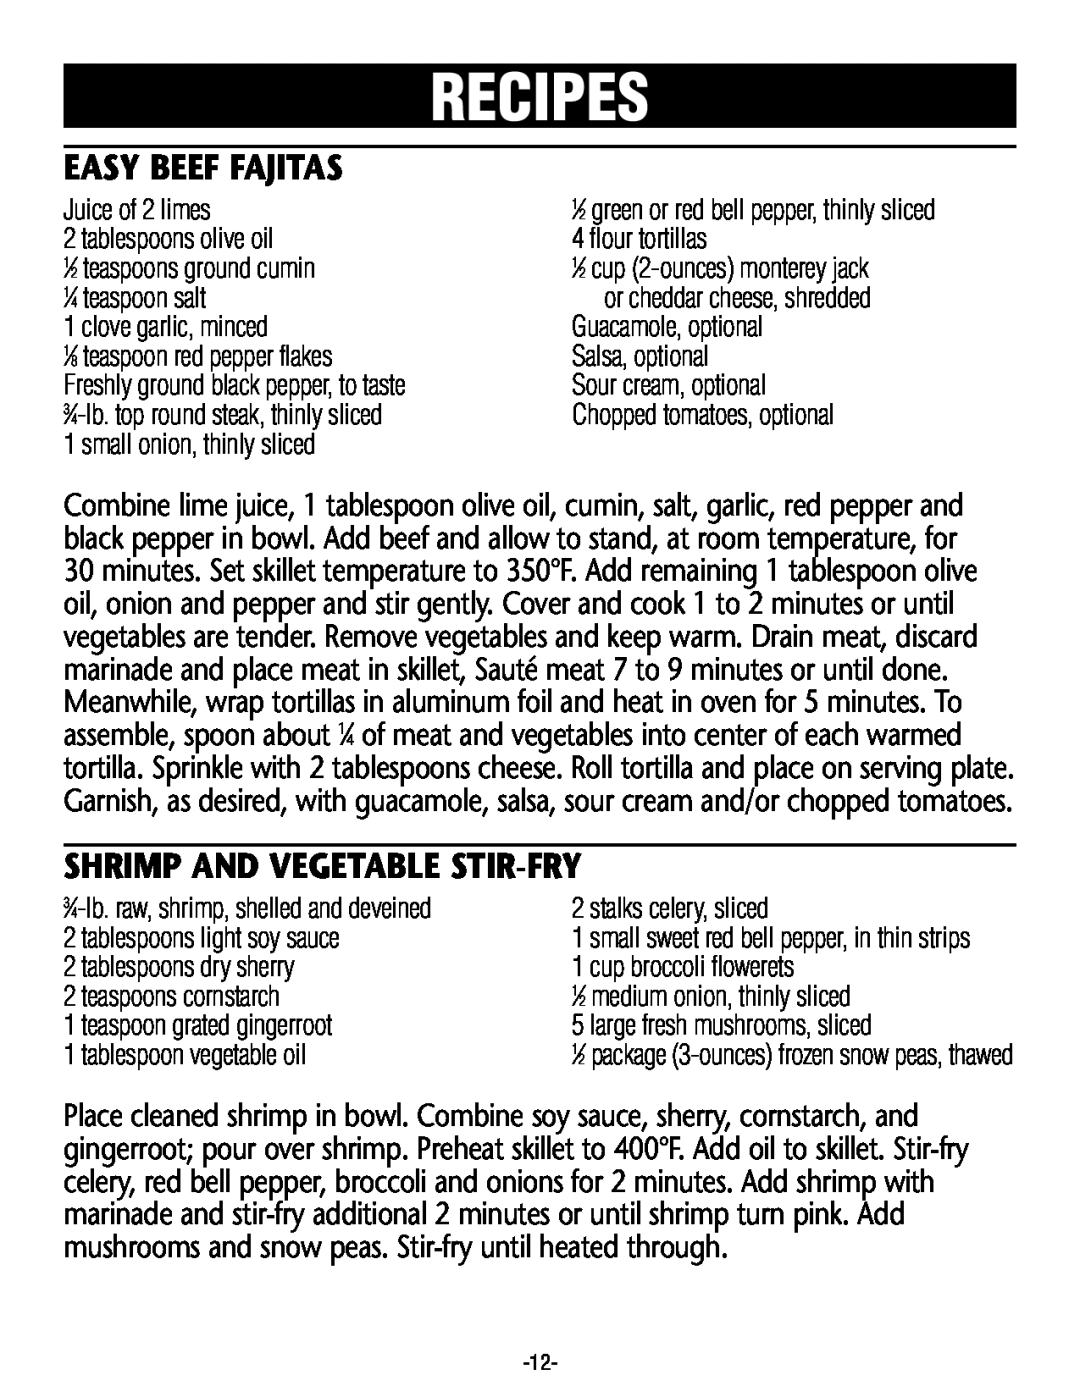 Rival S16RB manual Easy Beef Fajitas, Shrimp And Vegetable Stir-Fry, Recipes 